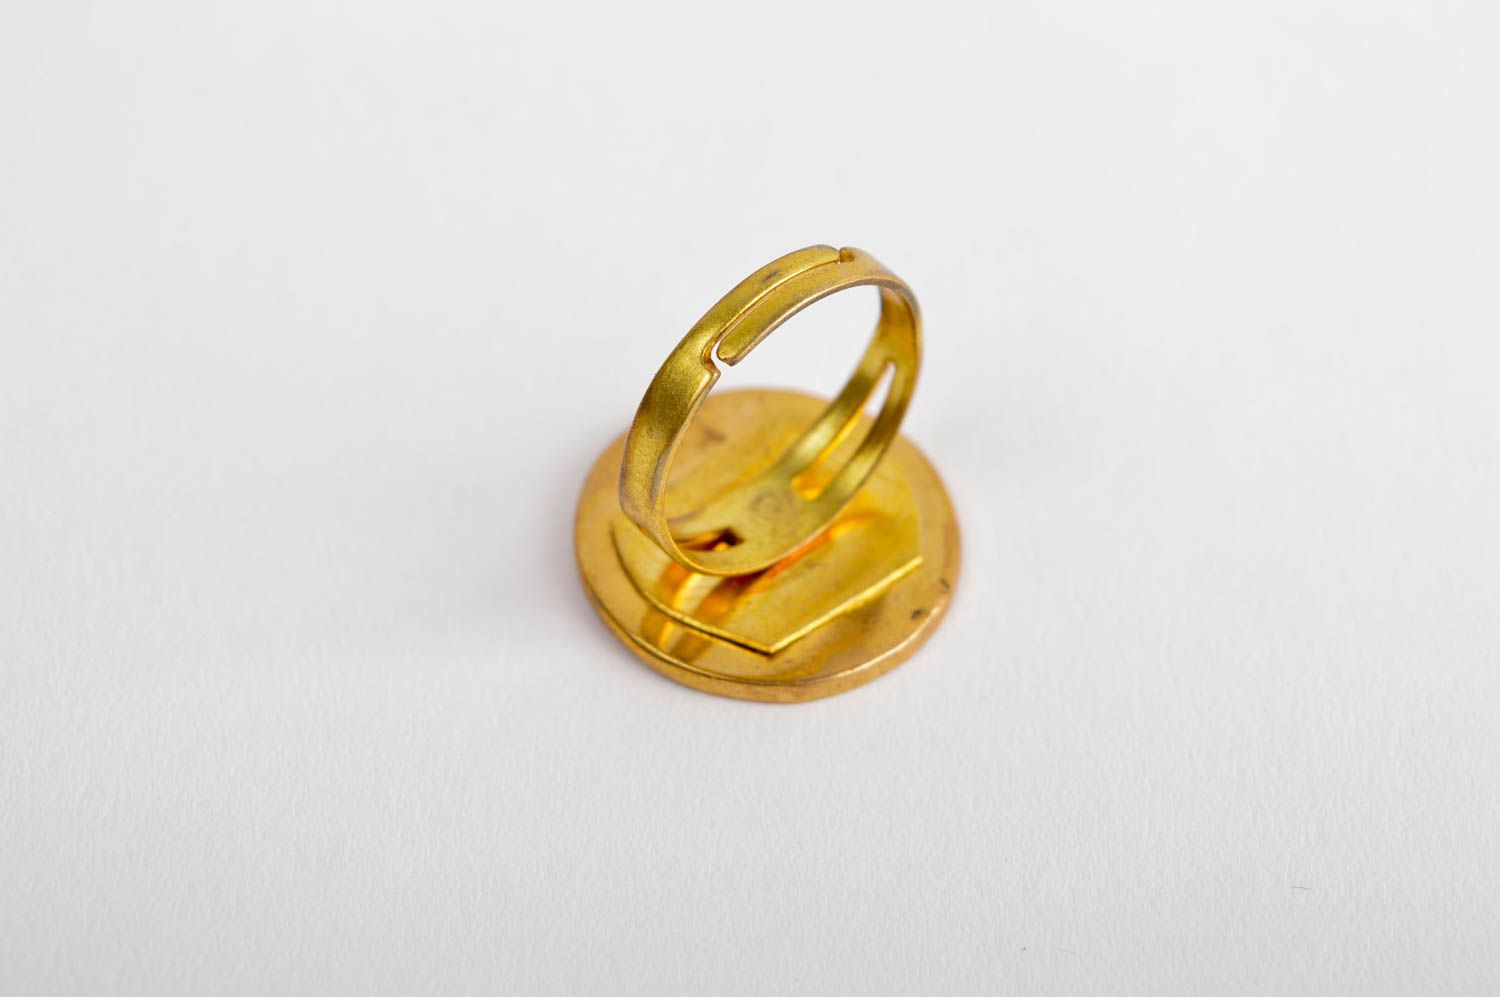 Handmade metal ring design beautiful jewellery handmade accessories gift ideas photo 5